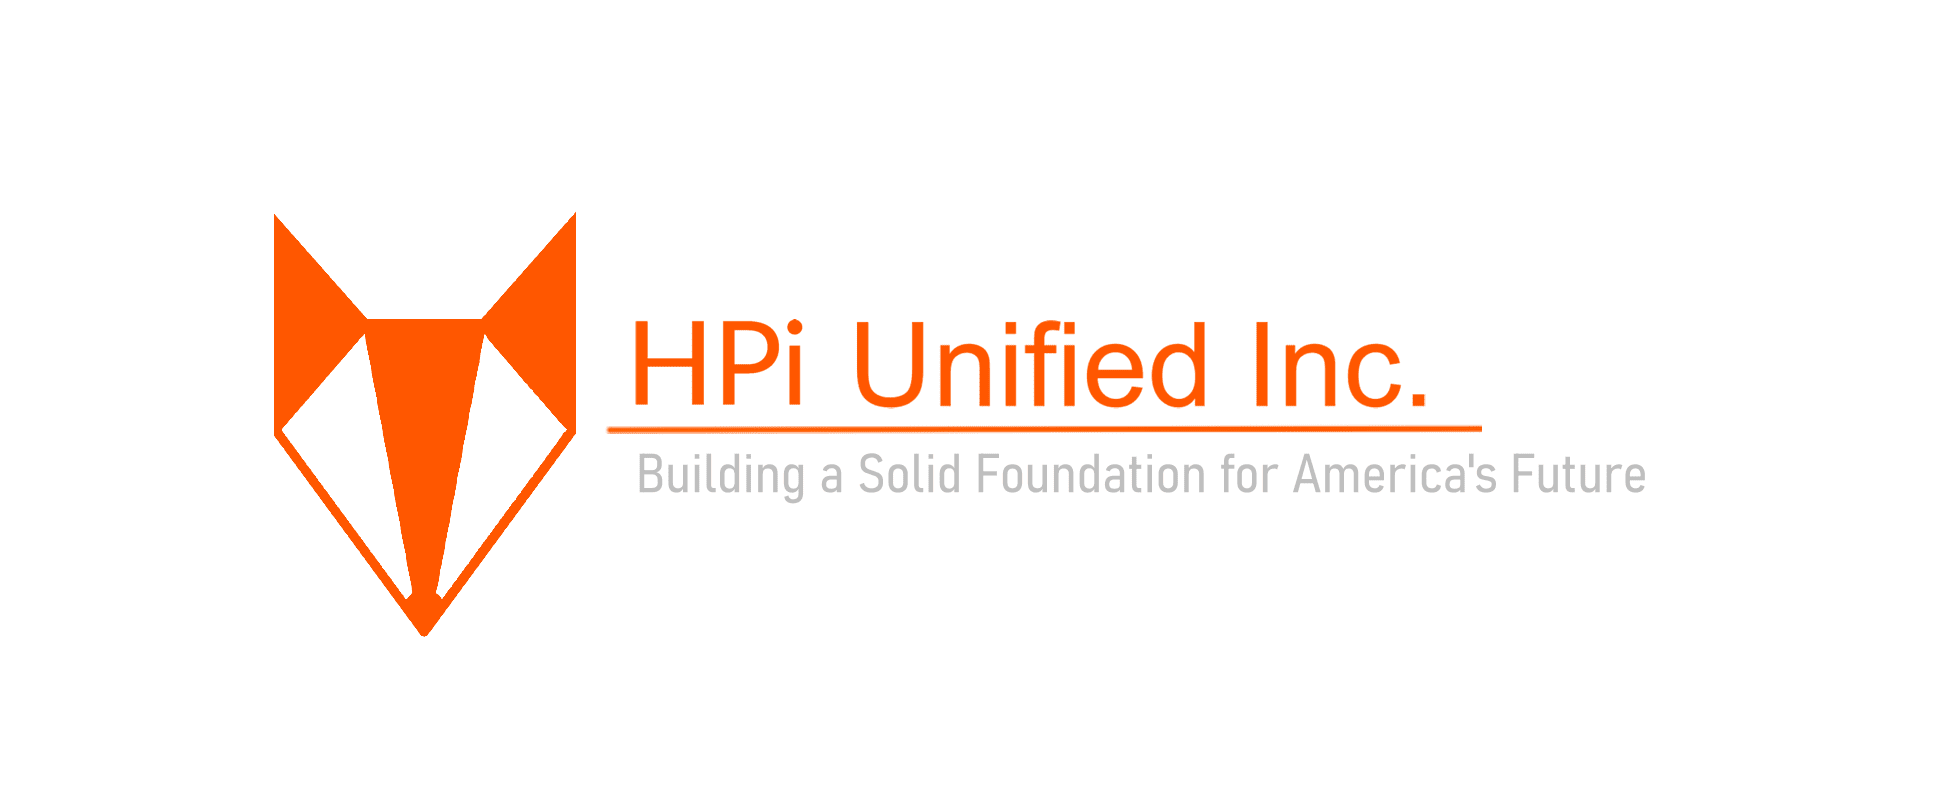 HPI unified inc